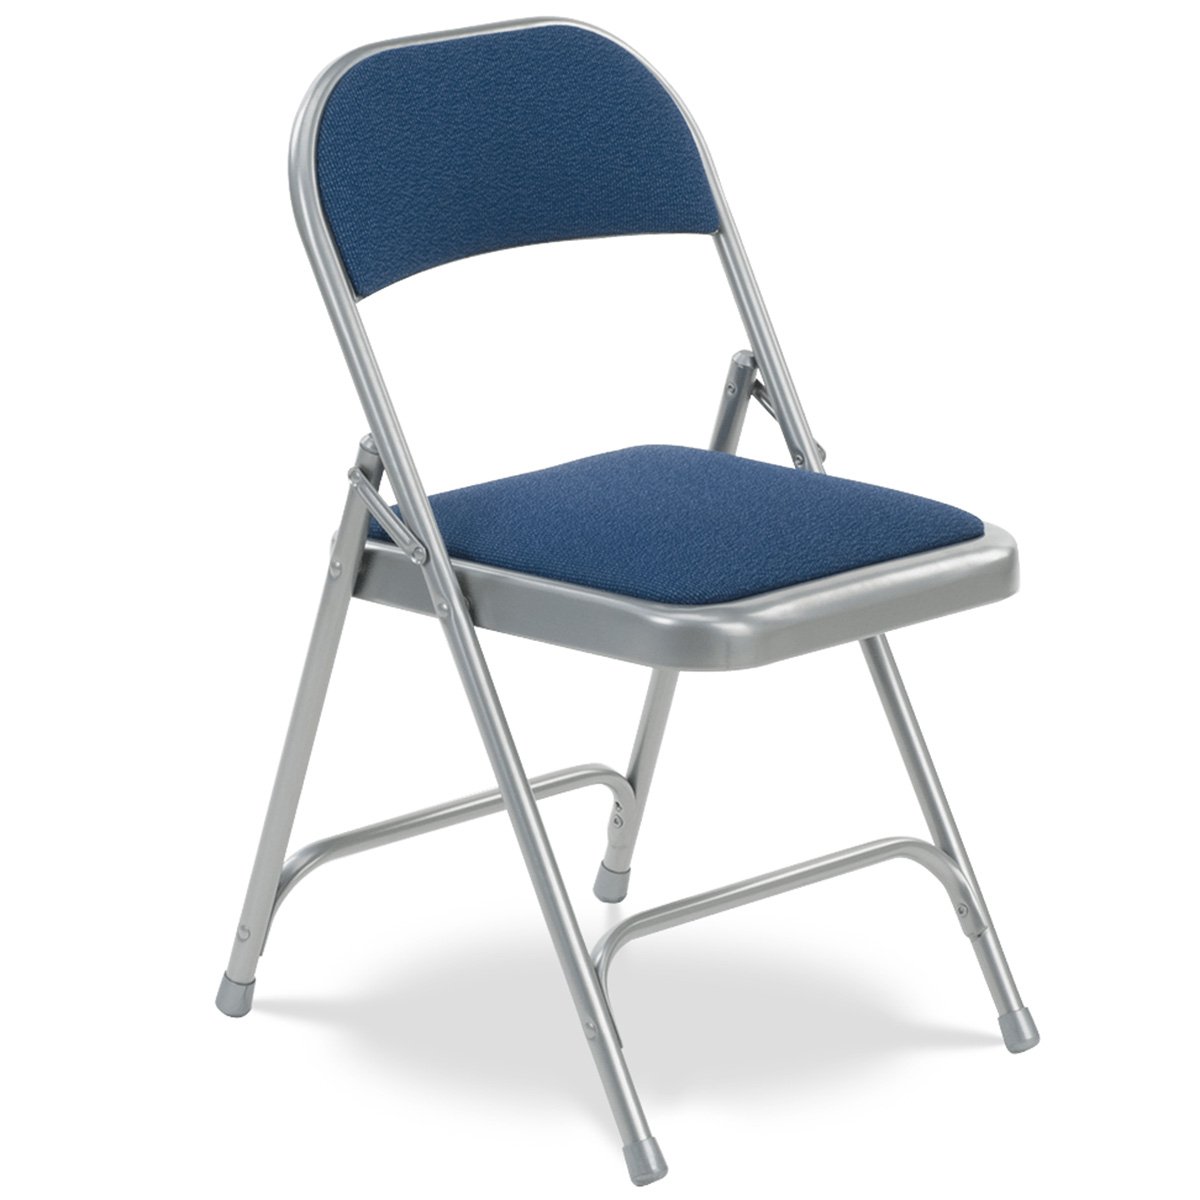 Virco 188 Series Folding Chair